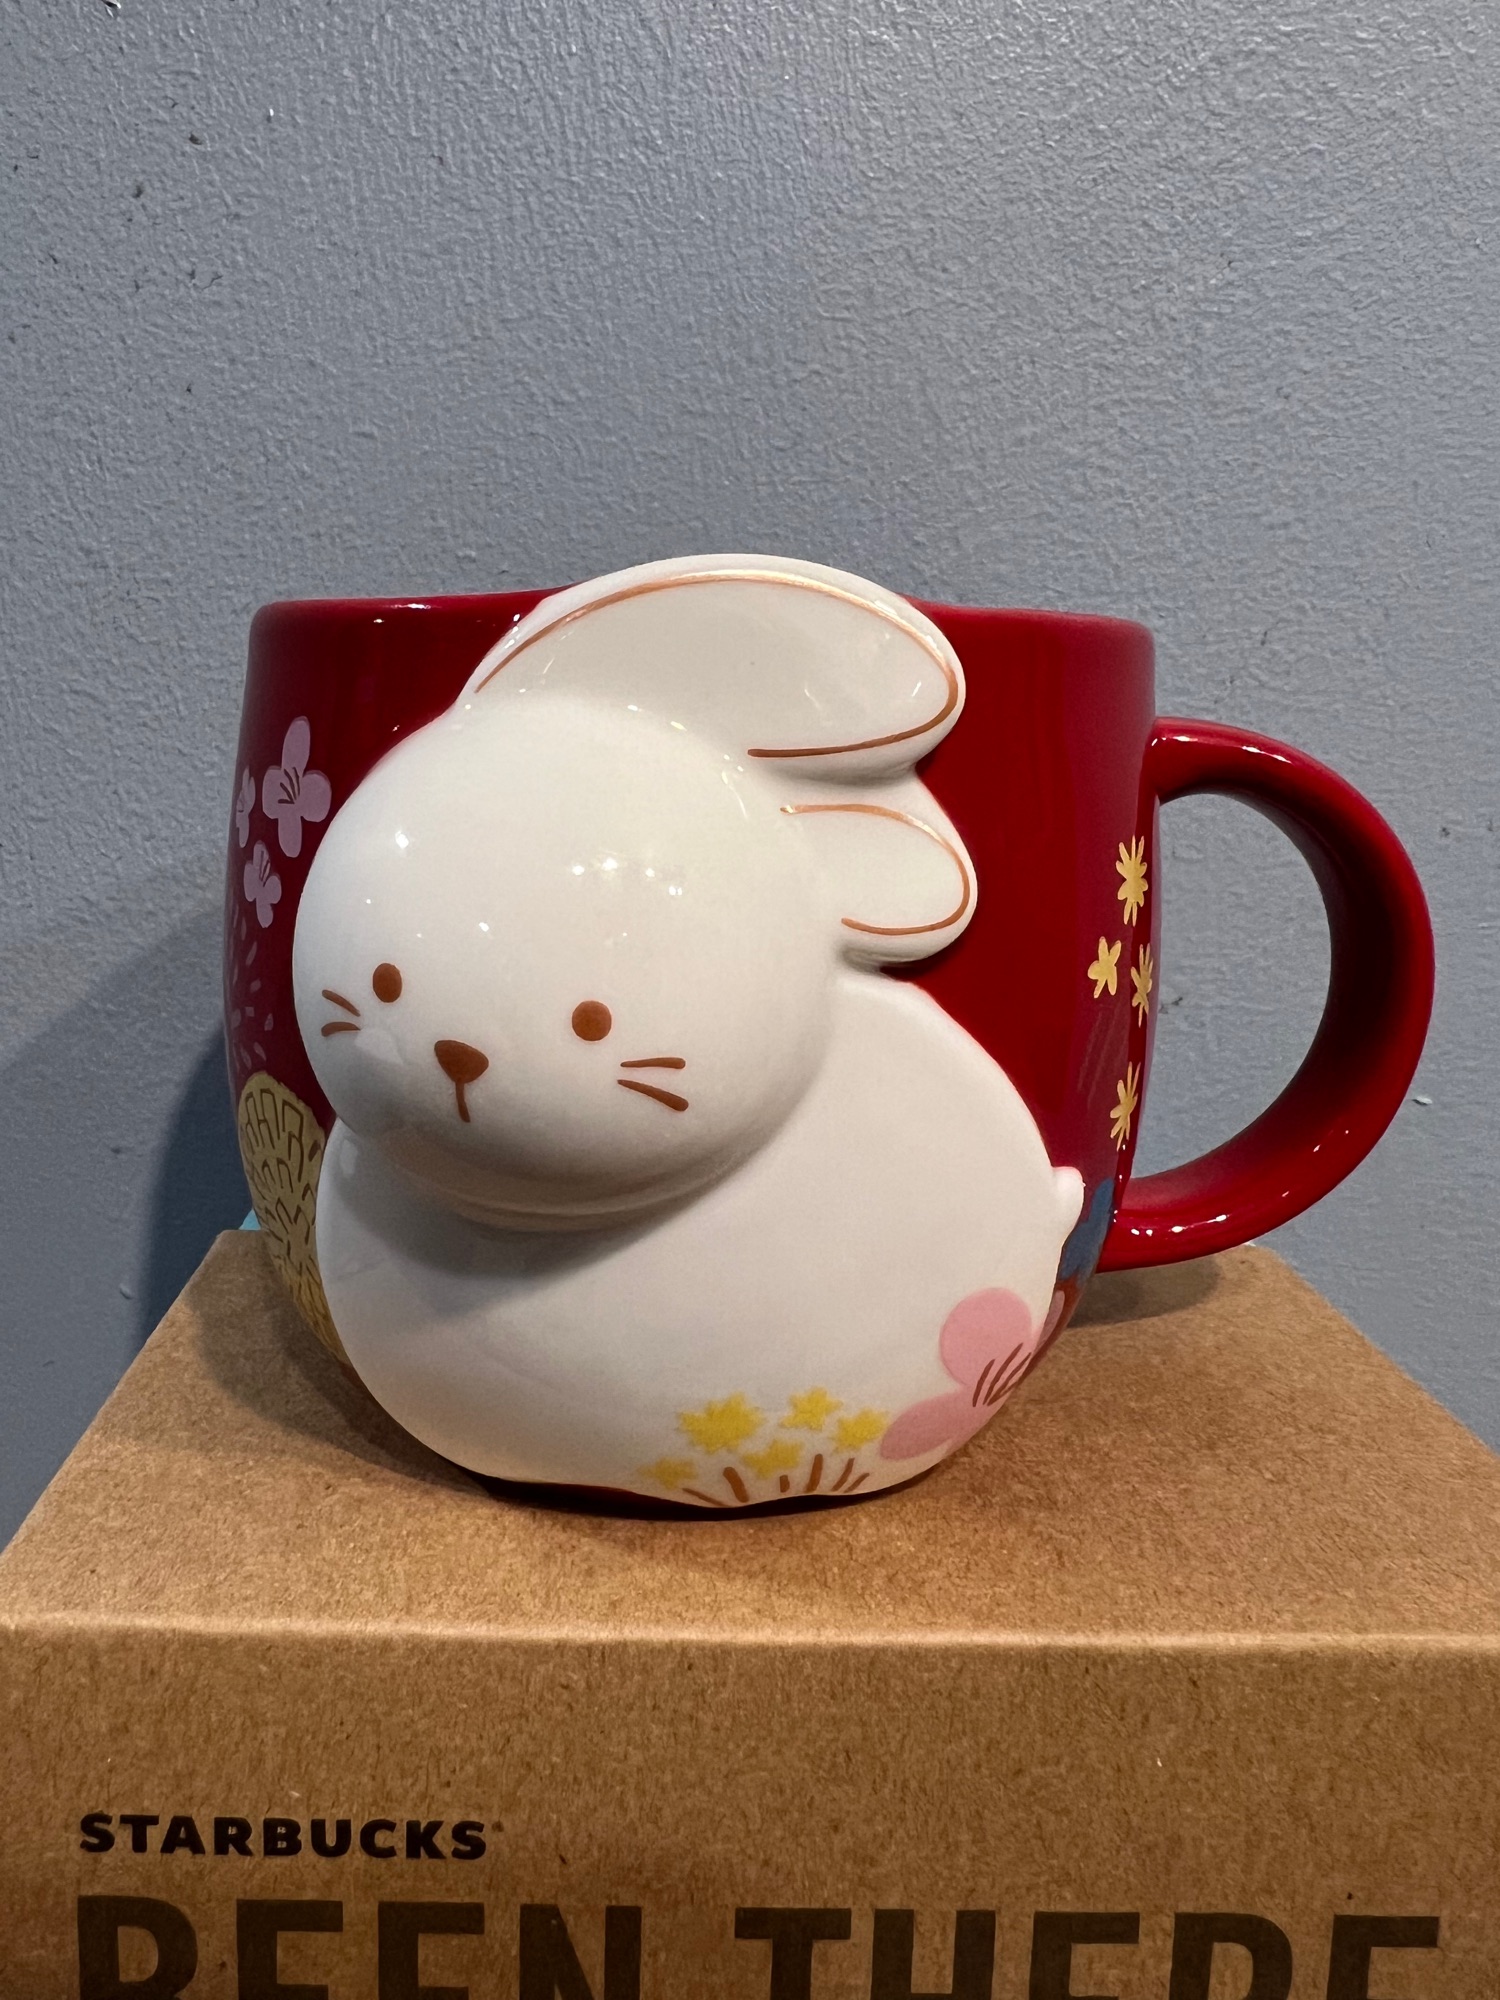 2023 CNY Rabbit Yellow 16oz Ceramic Mug - China – Starbies Rules Everything